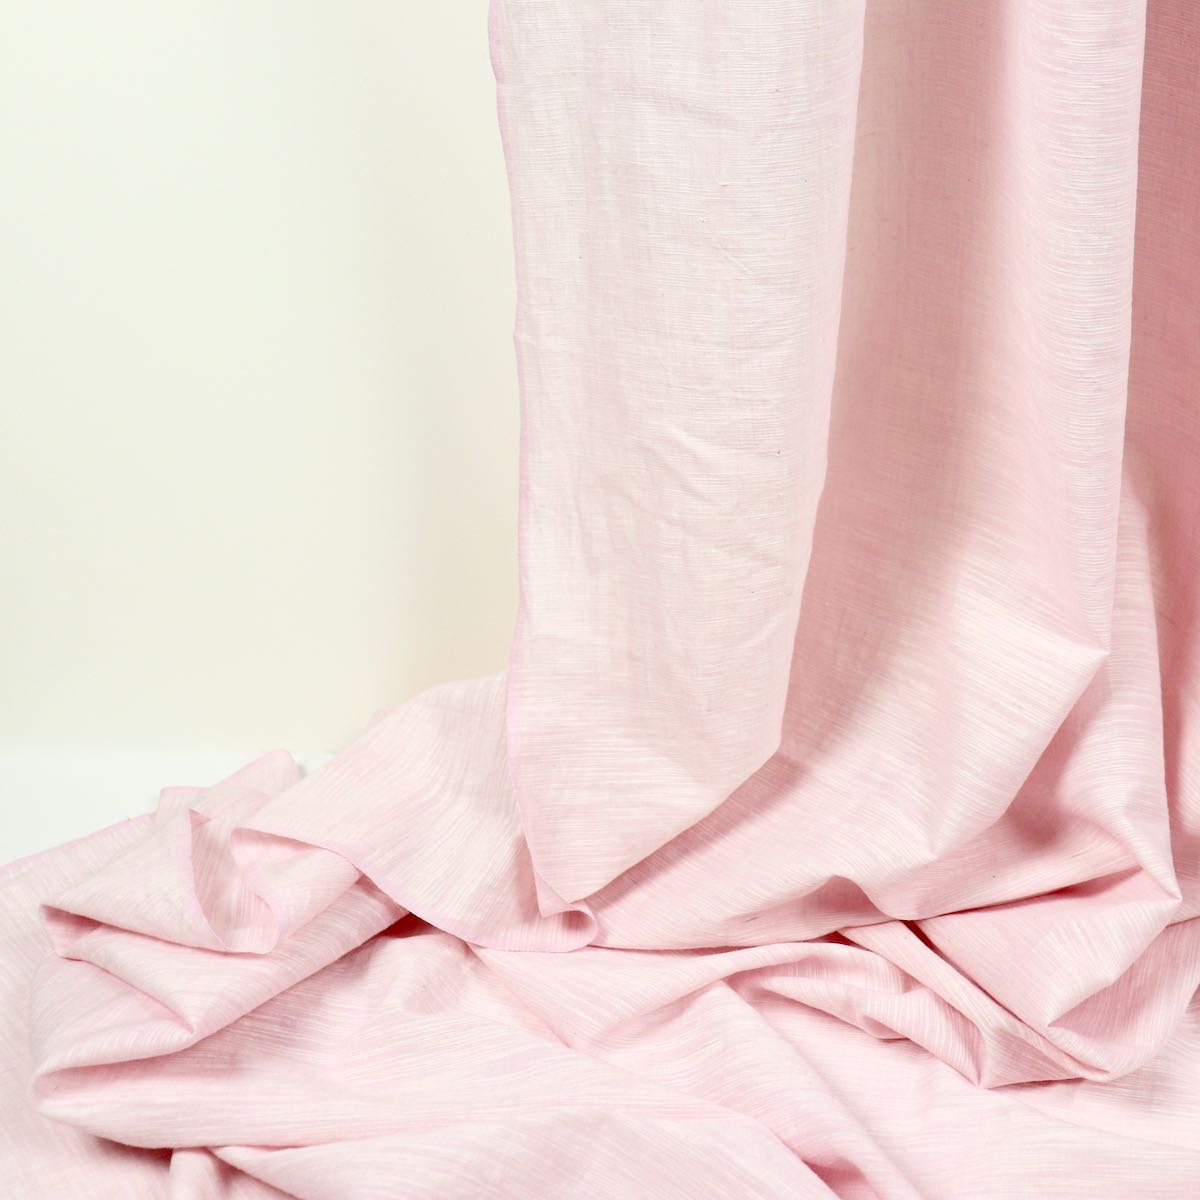 pink slub handloom cotton fabric